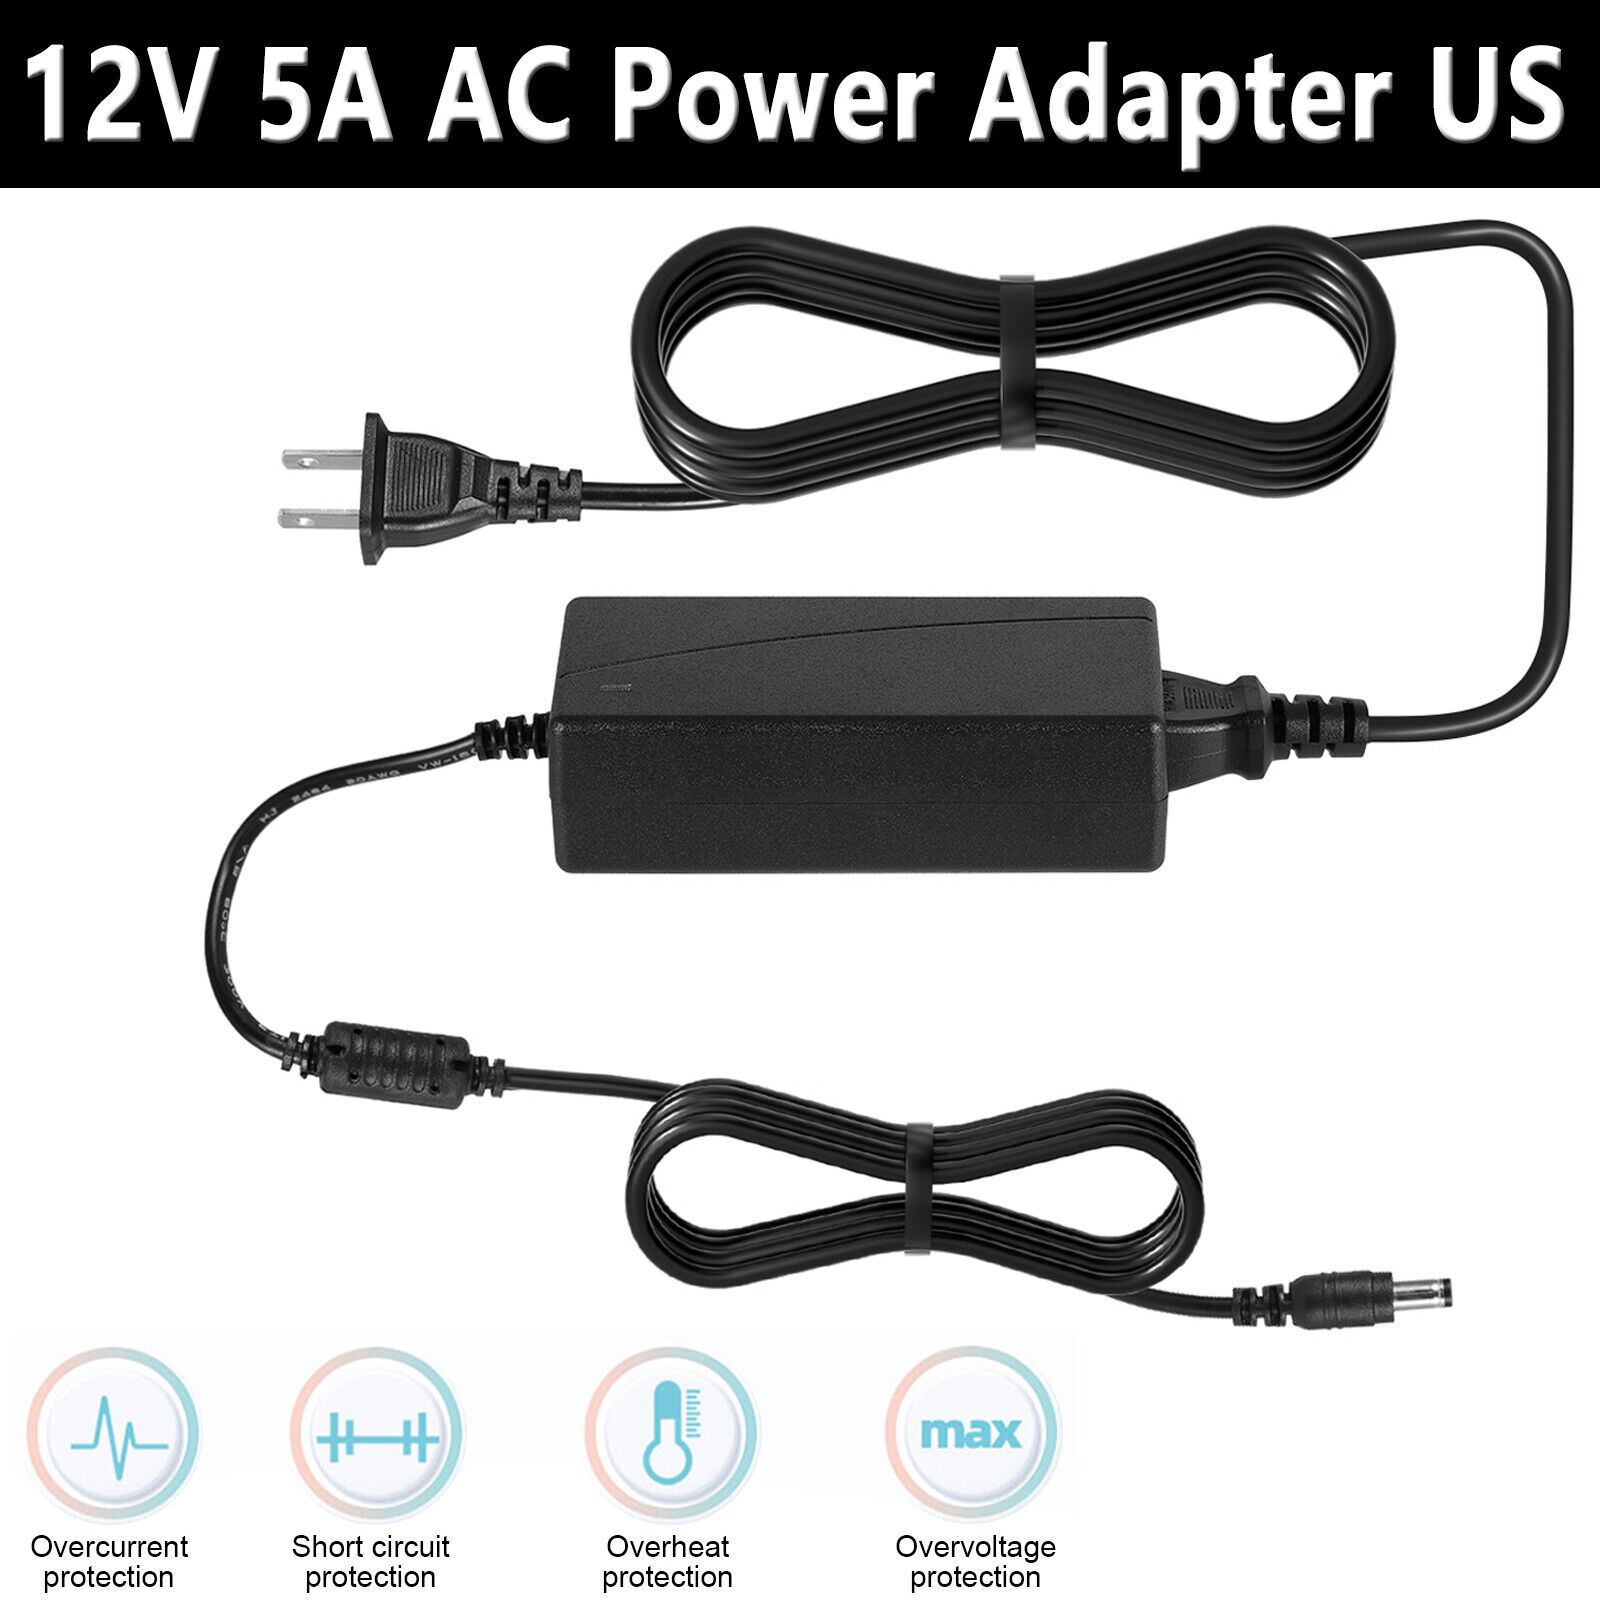 12V 5A AC Power Adapter Split Laptop Desktop Accessories General Purpose US